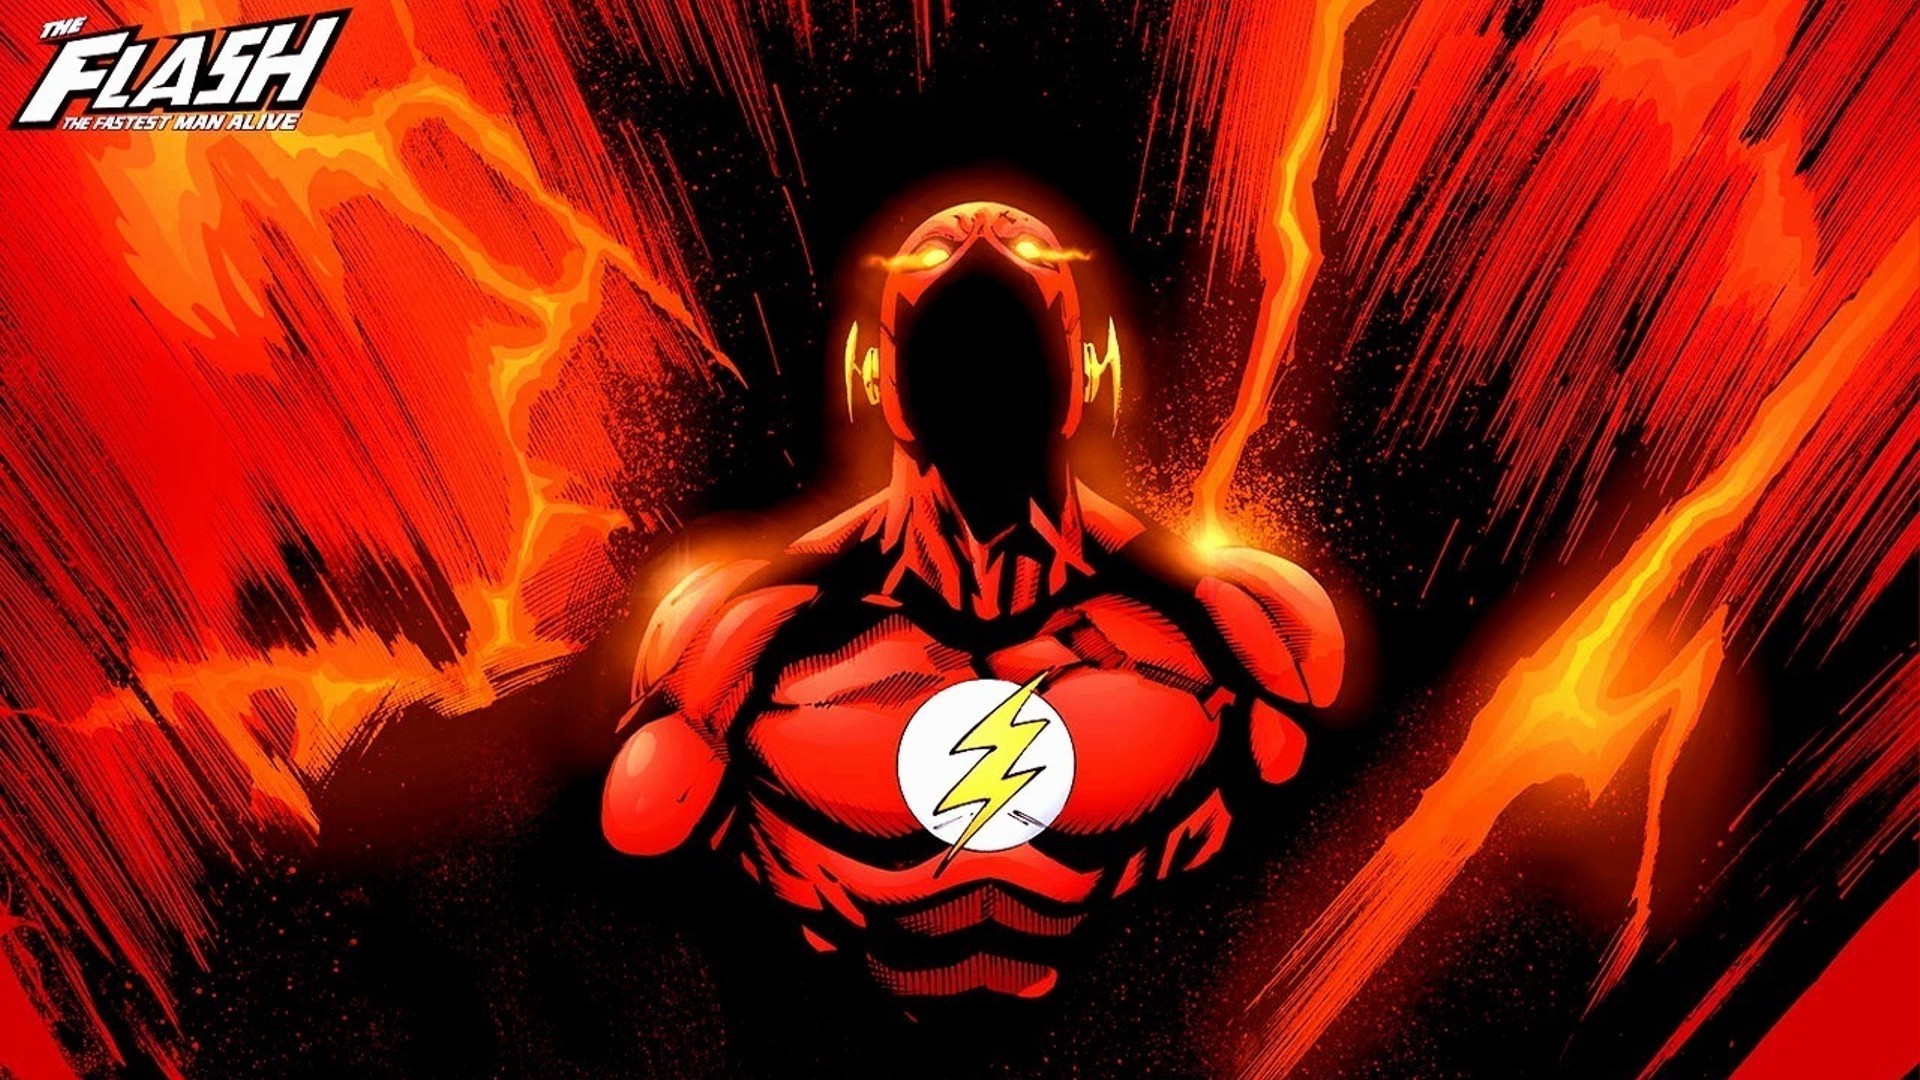 The Flash Red DC Comics Artwork 1920x1080